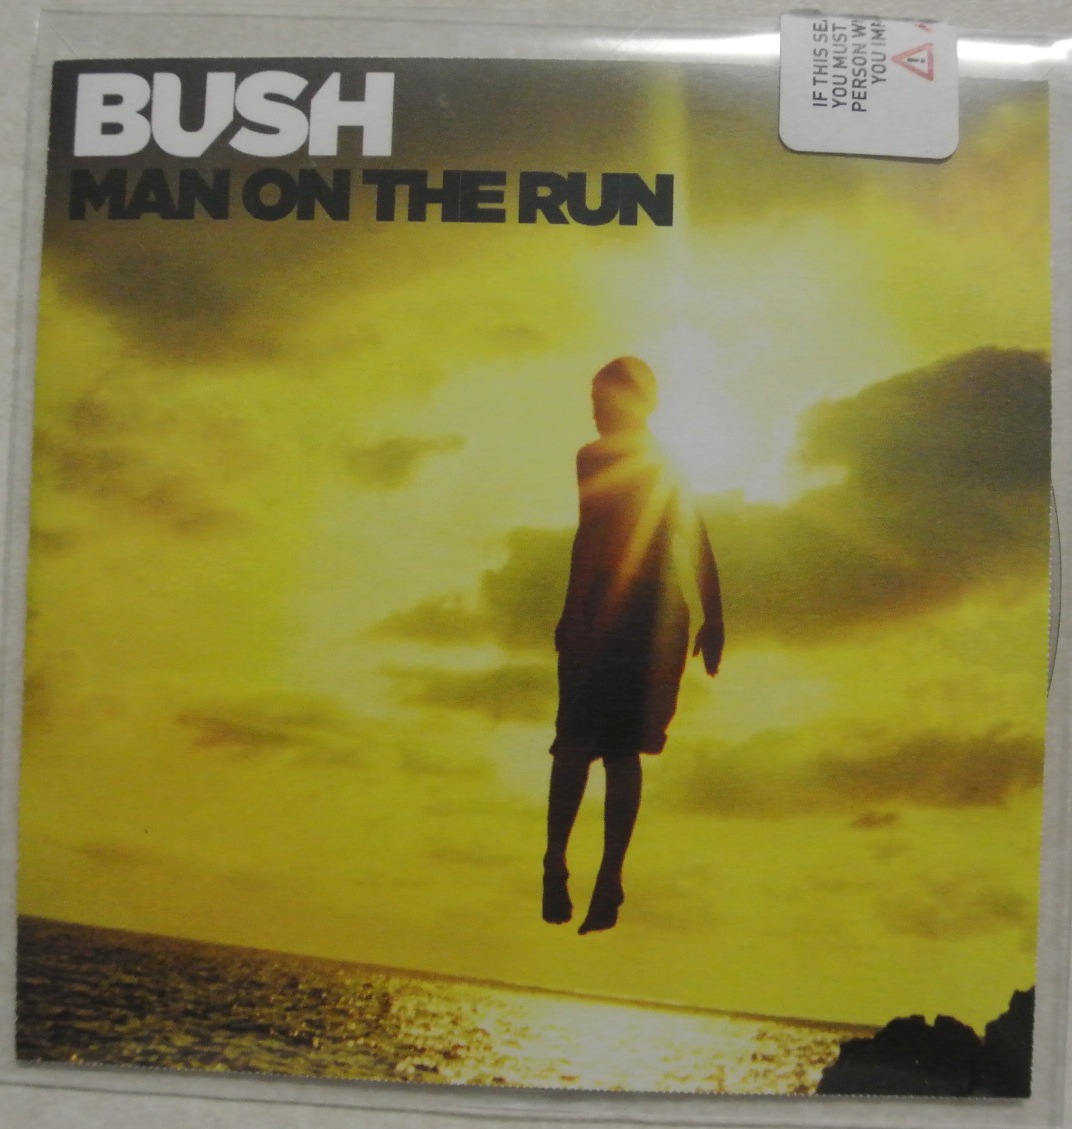 Bush Man On The Run